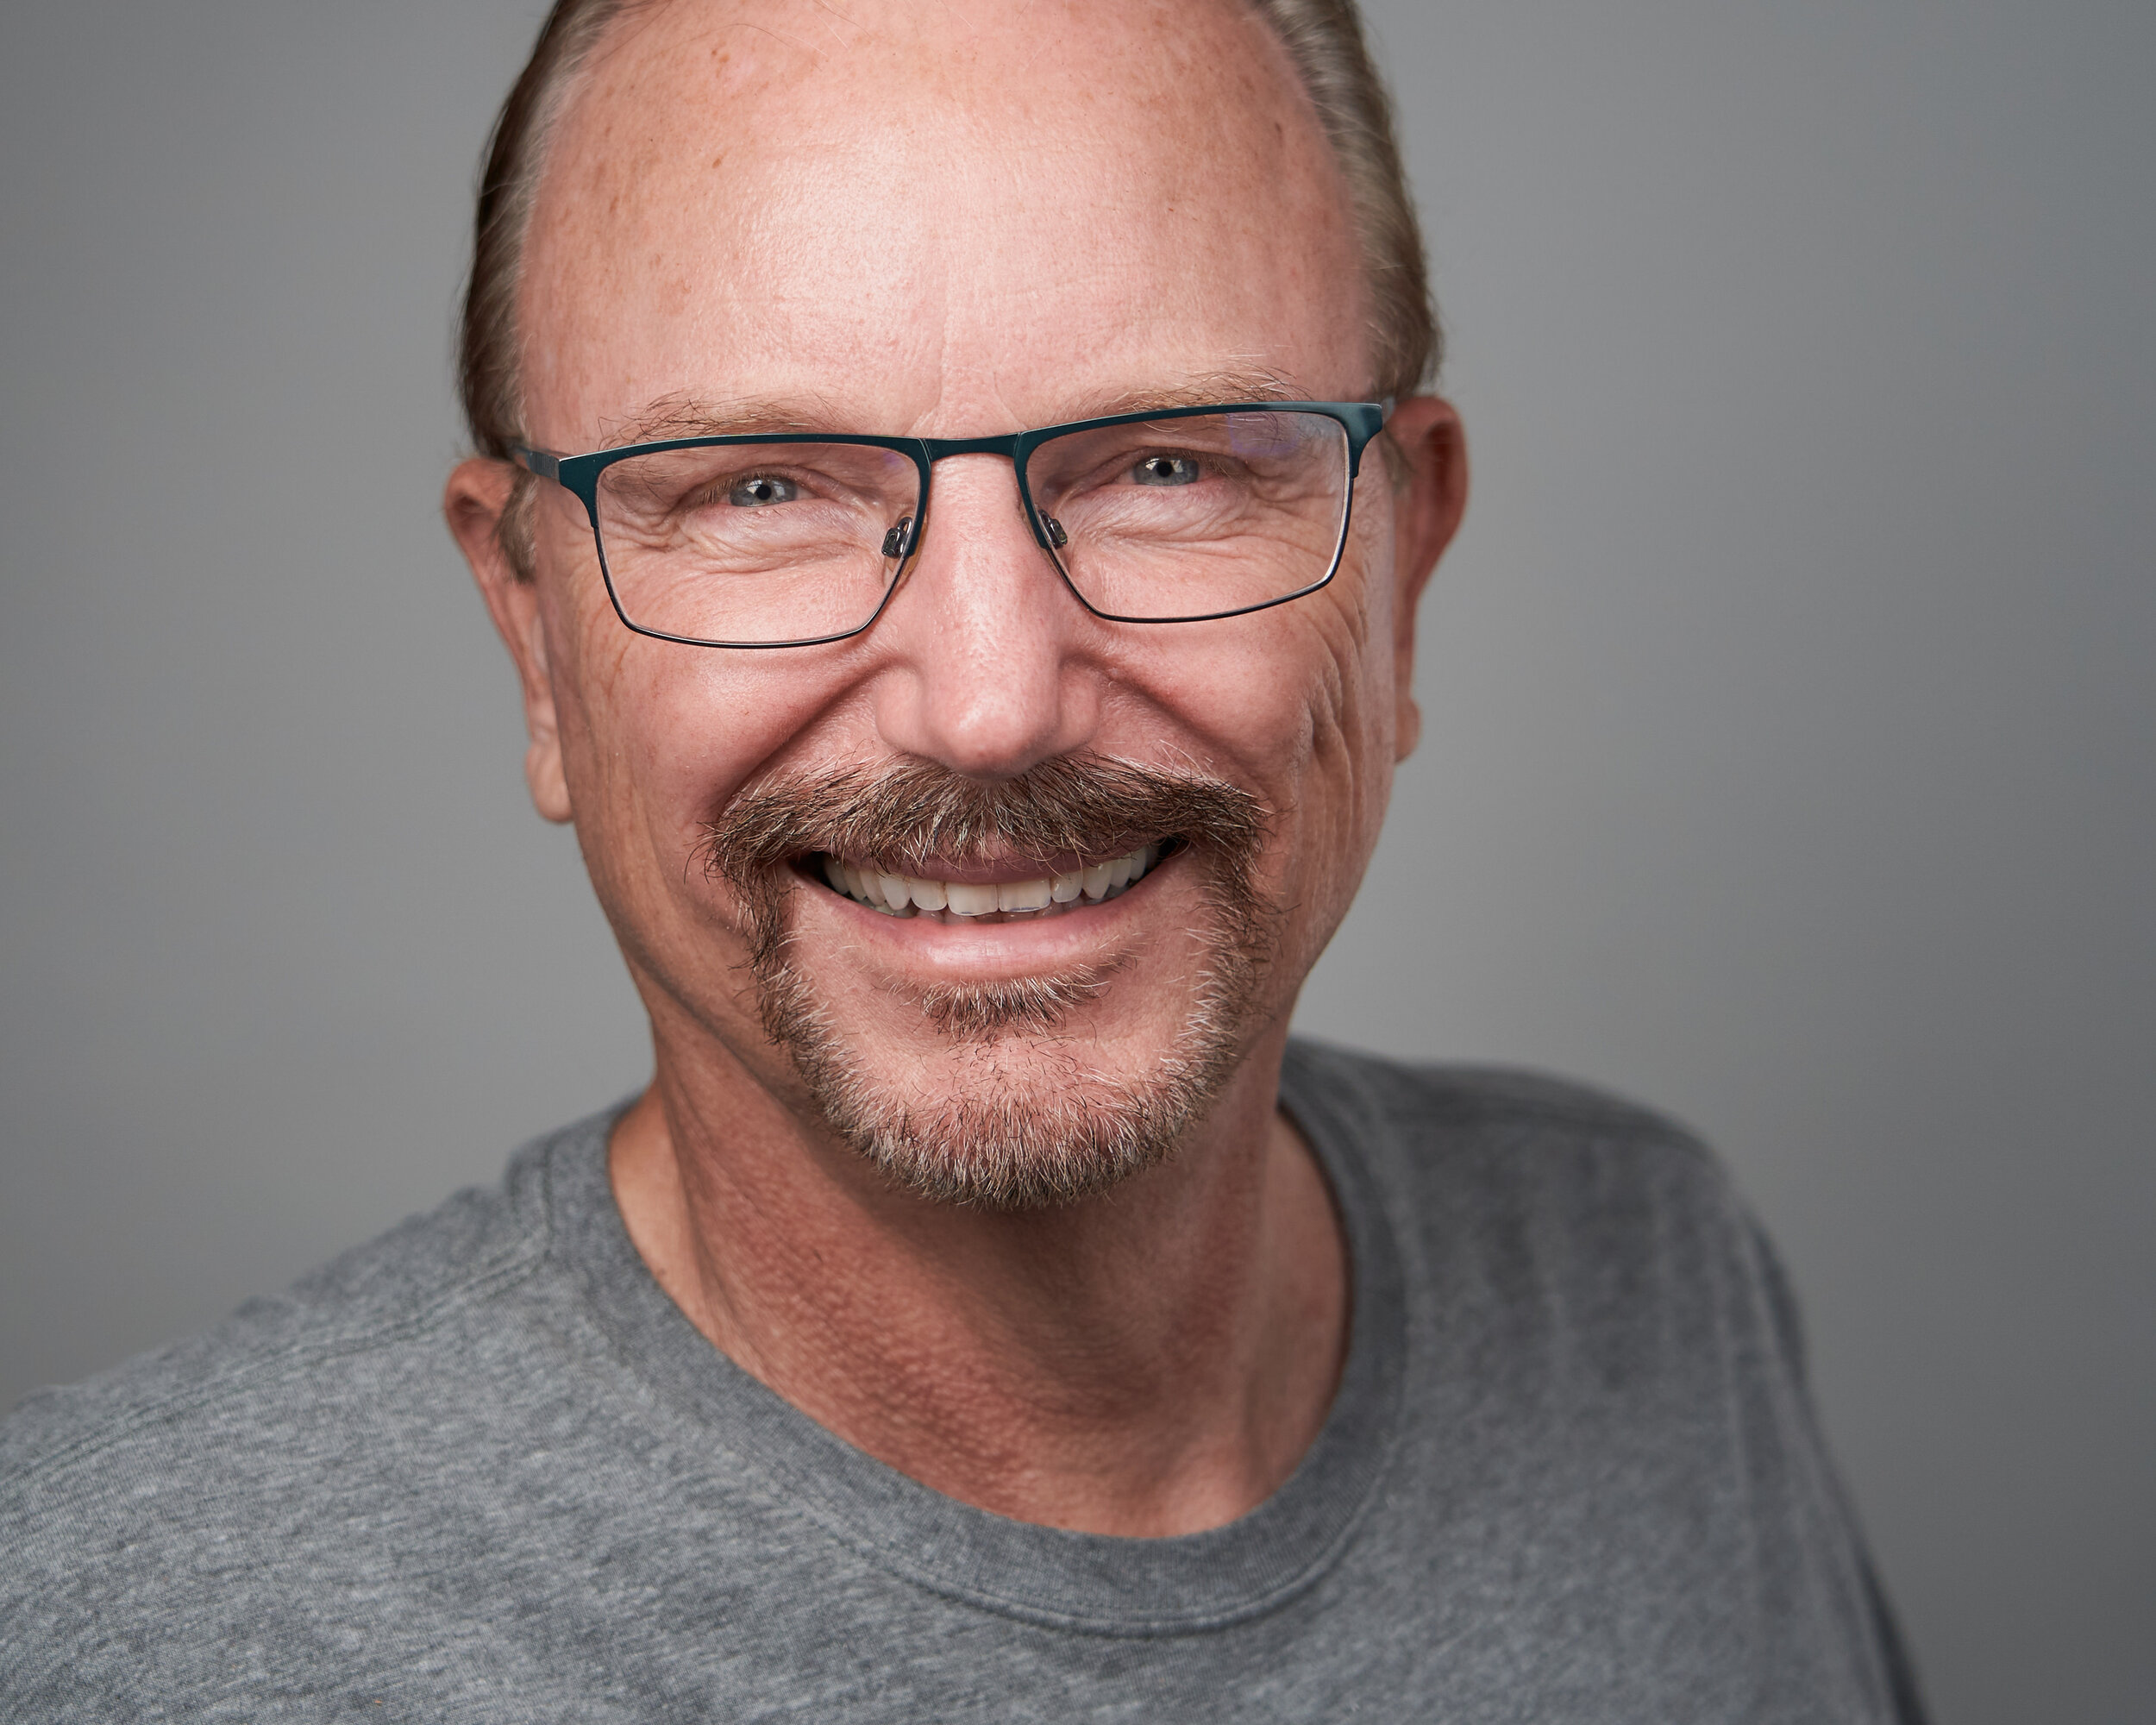  Bill O. poses for a headshot at SOSKIphoto in Hayward, California, on October 9, 2020. (Stan Olszewski/SOSKIphoto) 